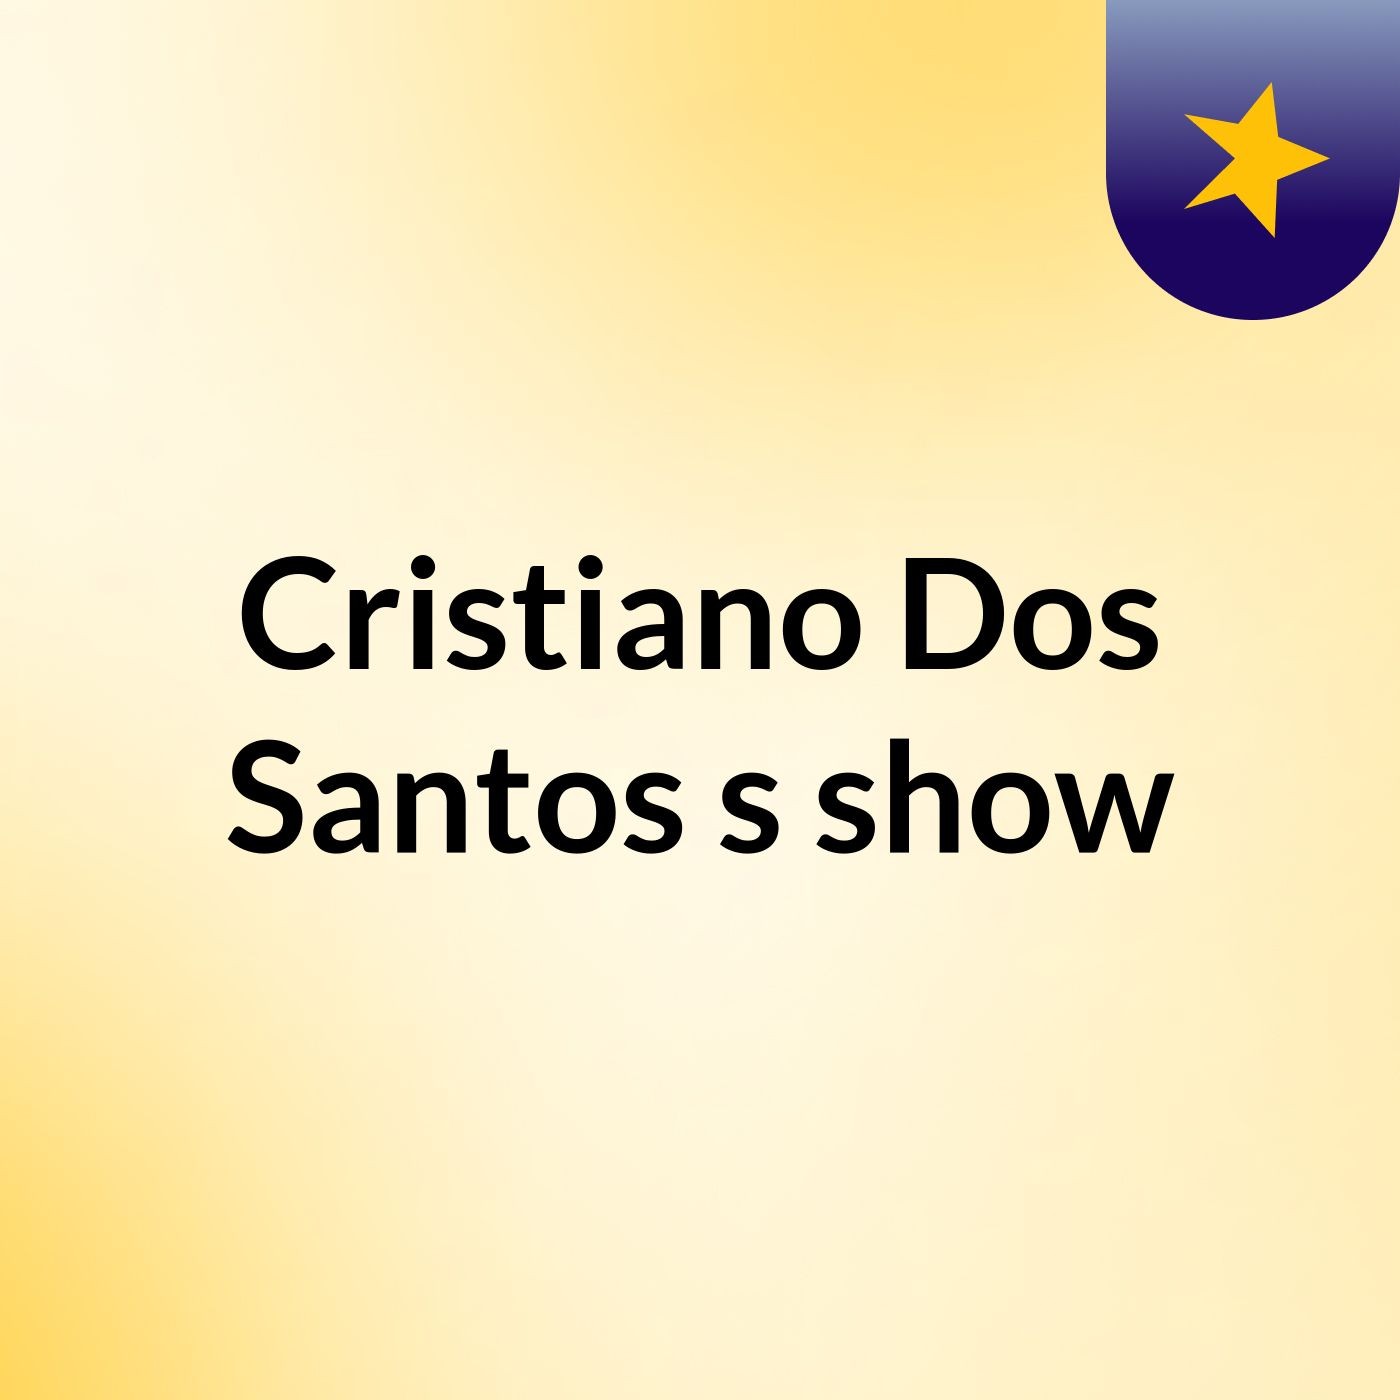 Cristiano Dos Santos's show